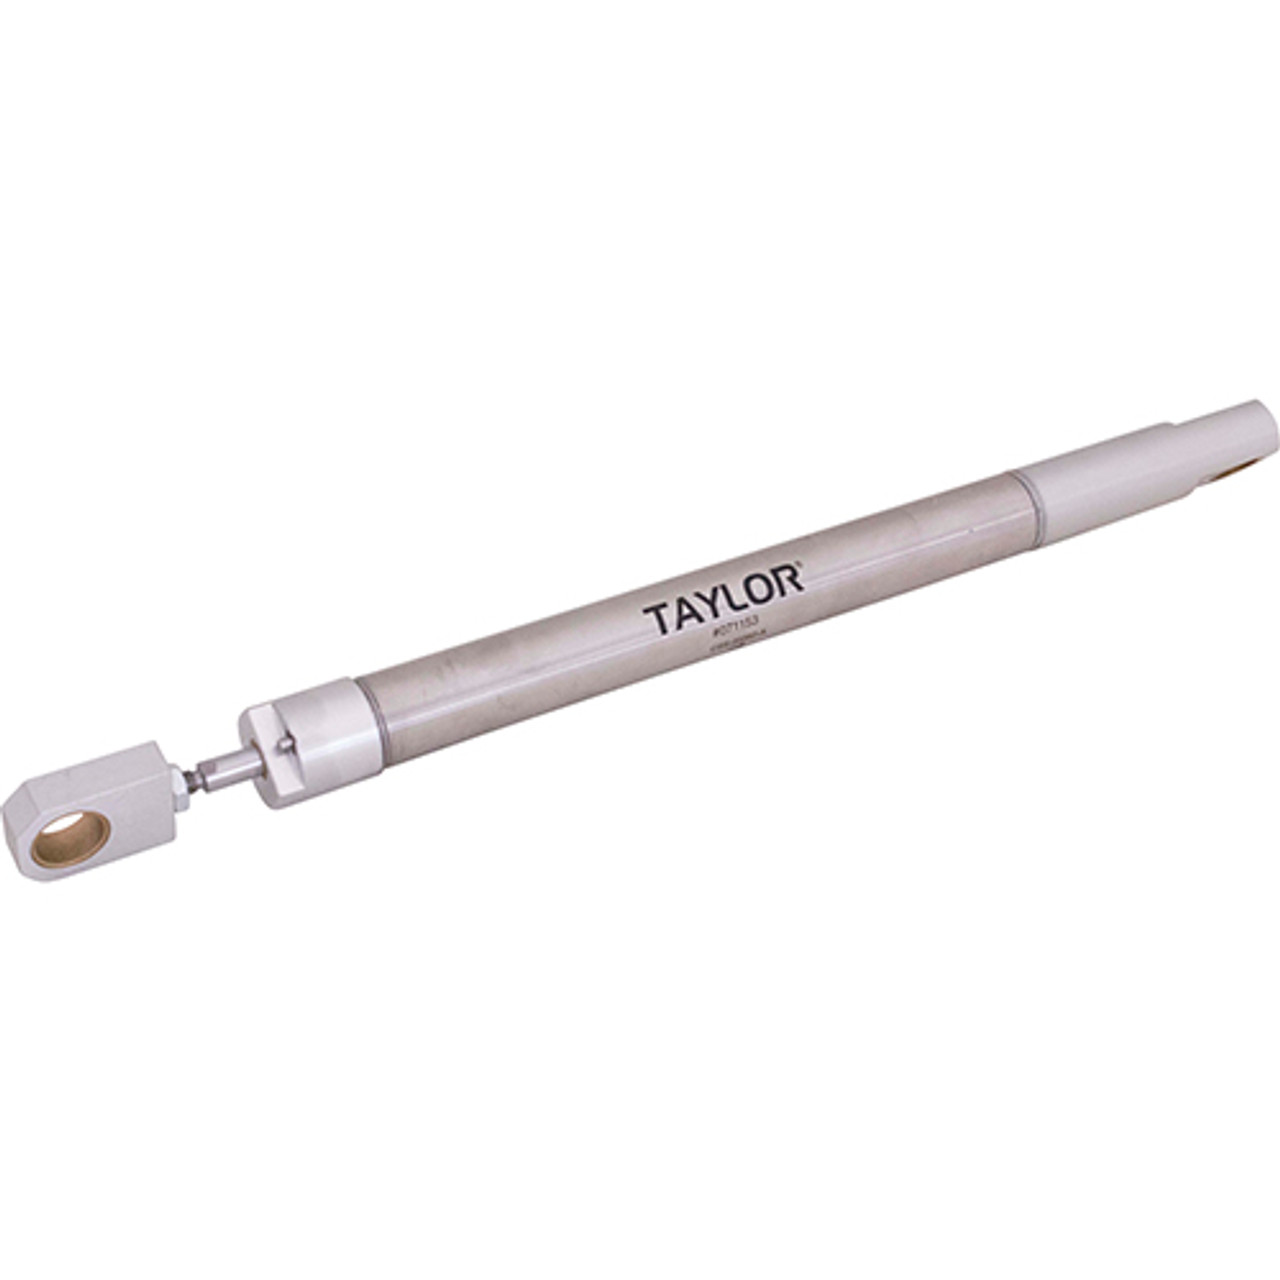 Taylor Freezer 071153 - Damper, N/S Non-Adj 4.5" Stroke